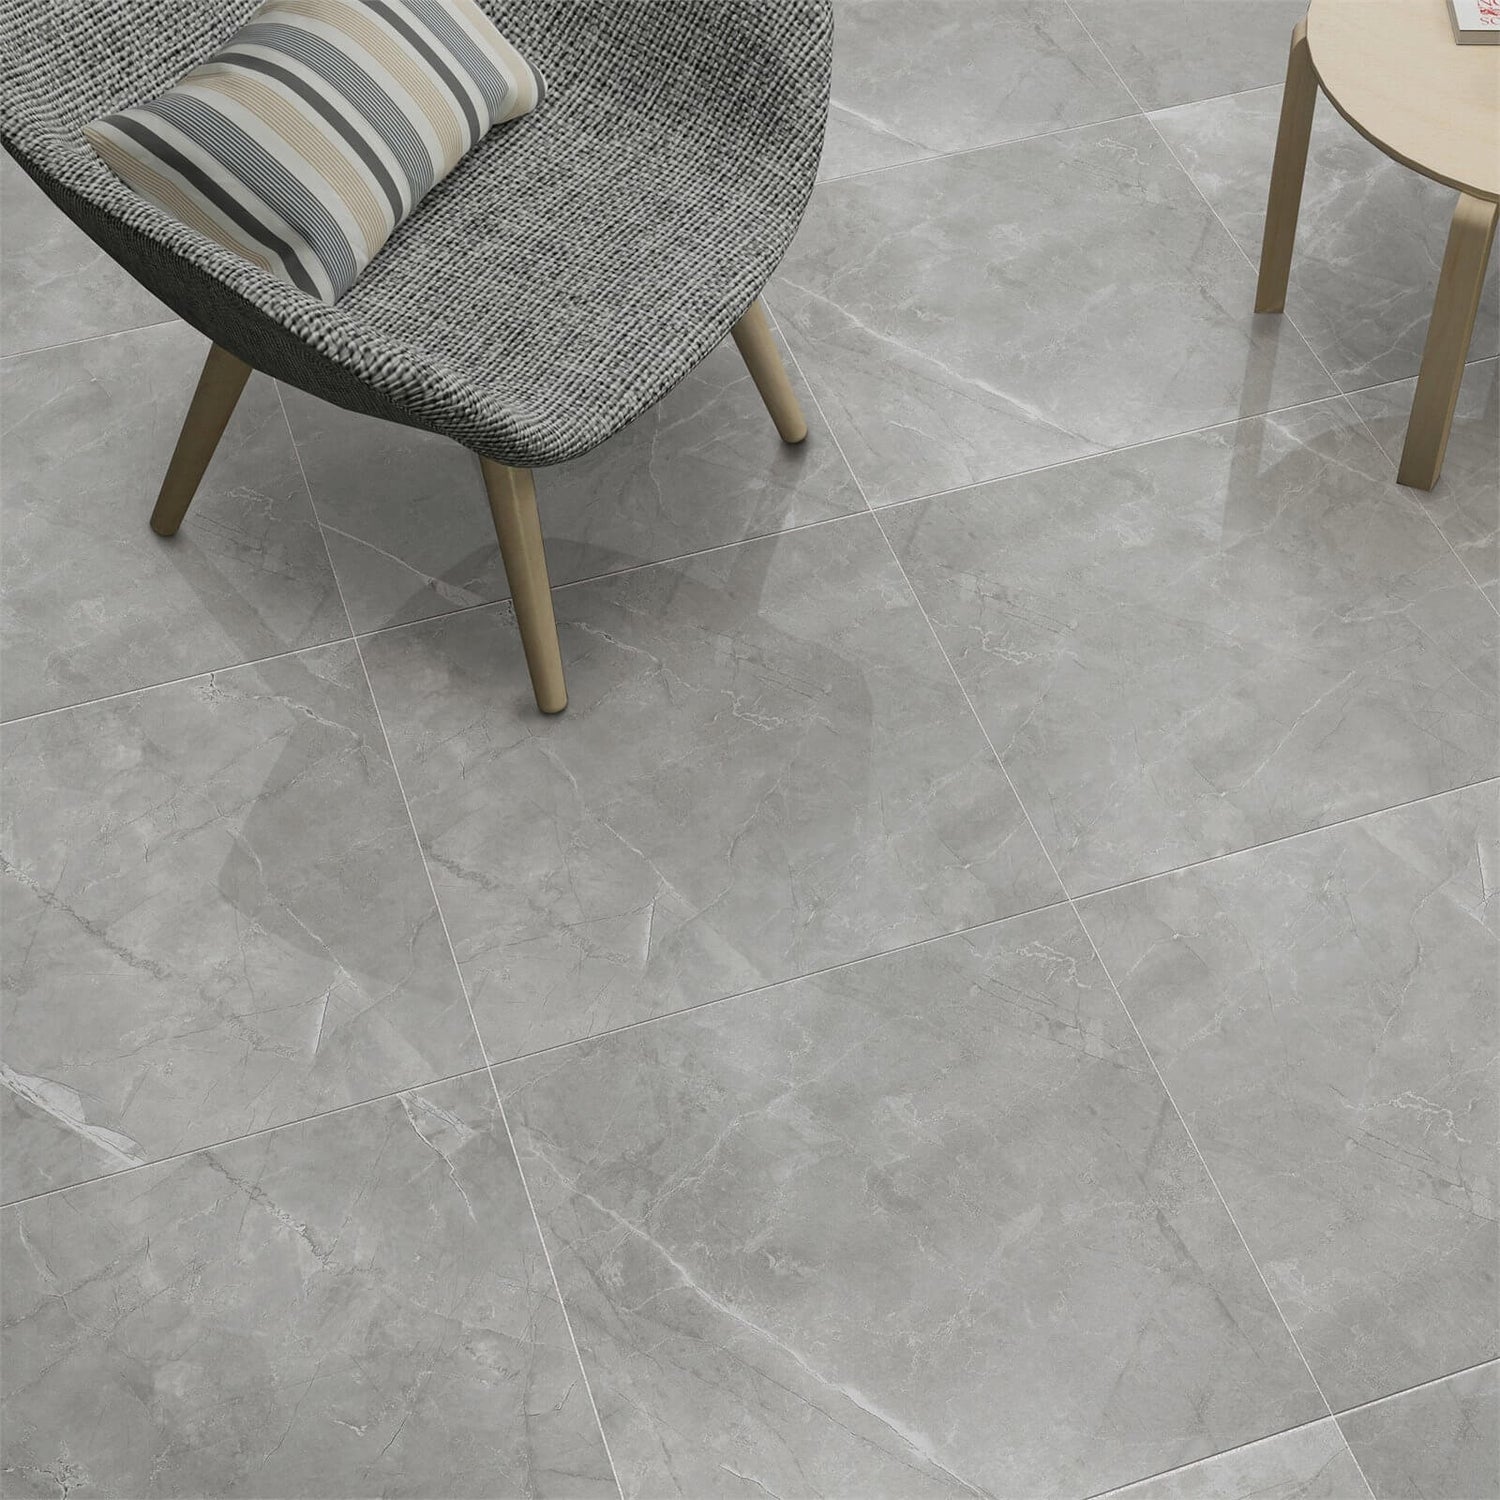 Lux Arctic Grey Polished Floor Tiles, Grey Shiny Floor Tiles